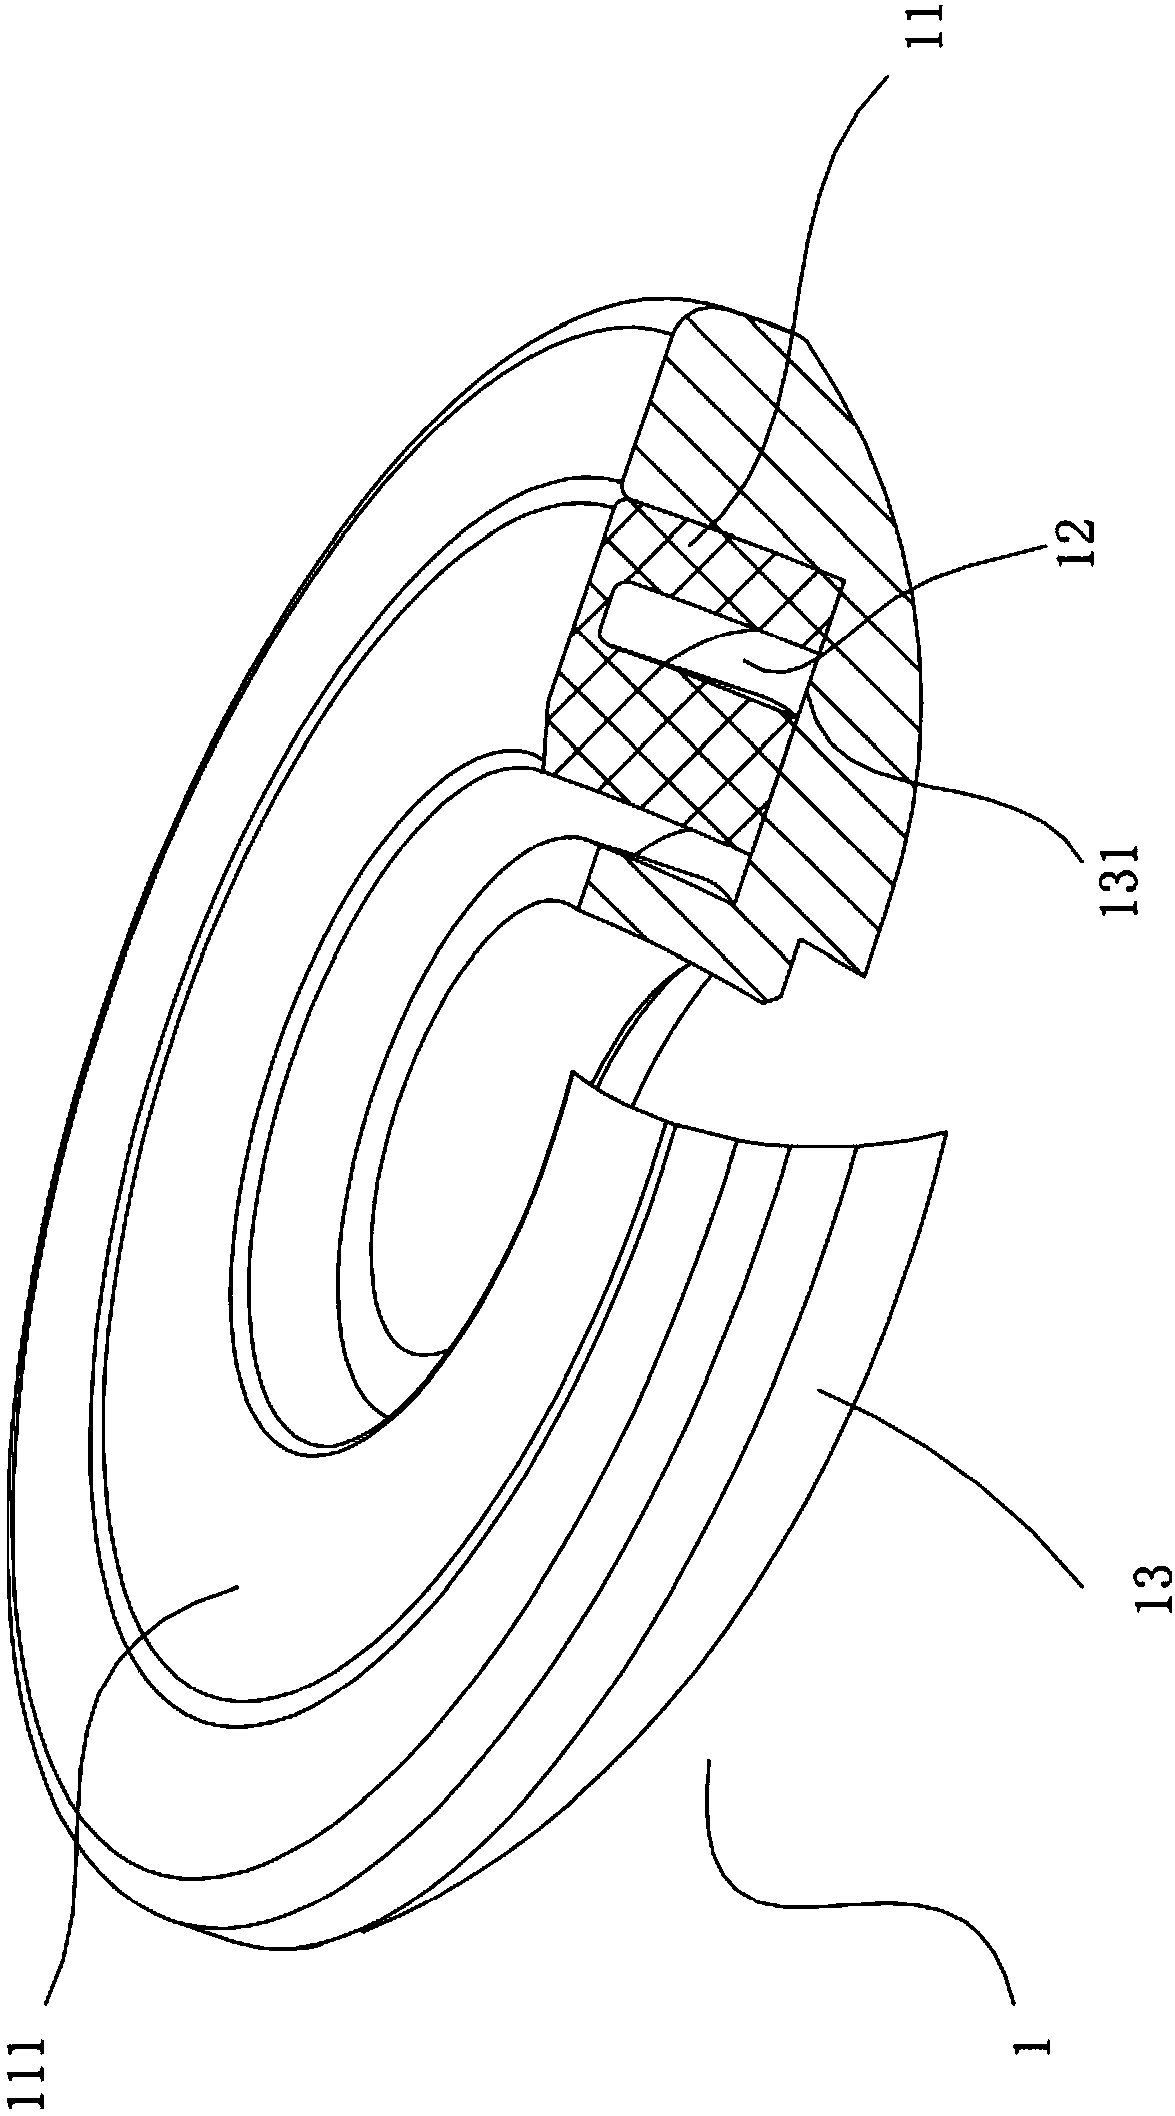 Stapler with cutting mechanism